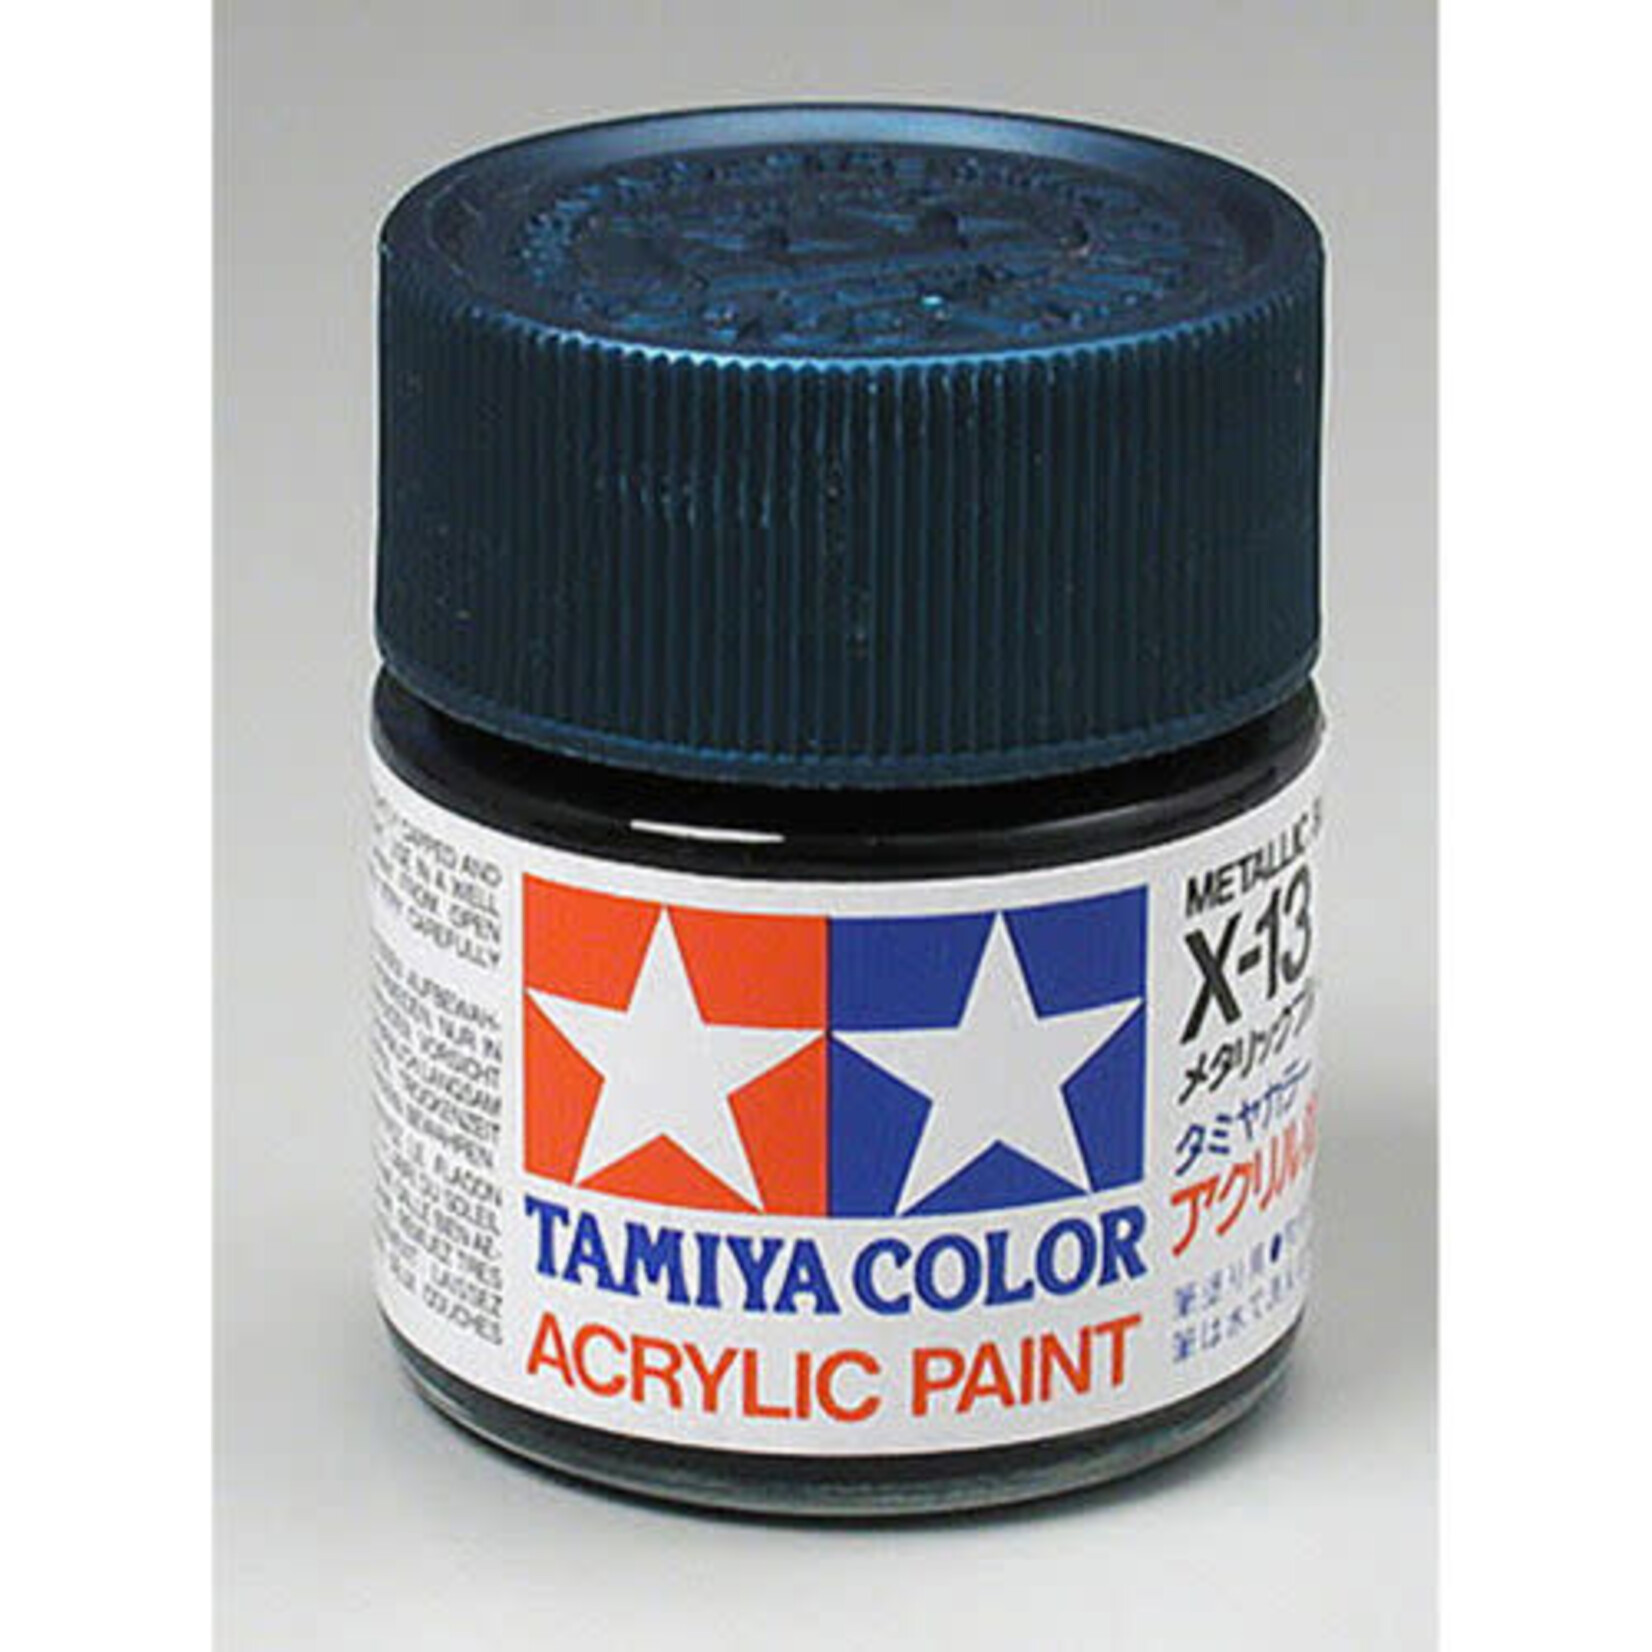 Tamiya Tamiya X-13 Metallic Blue 23ml